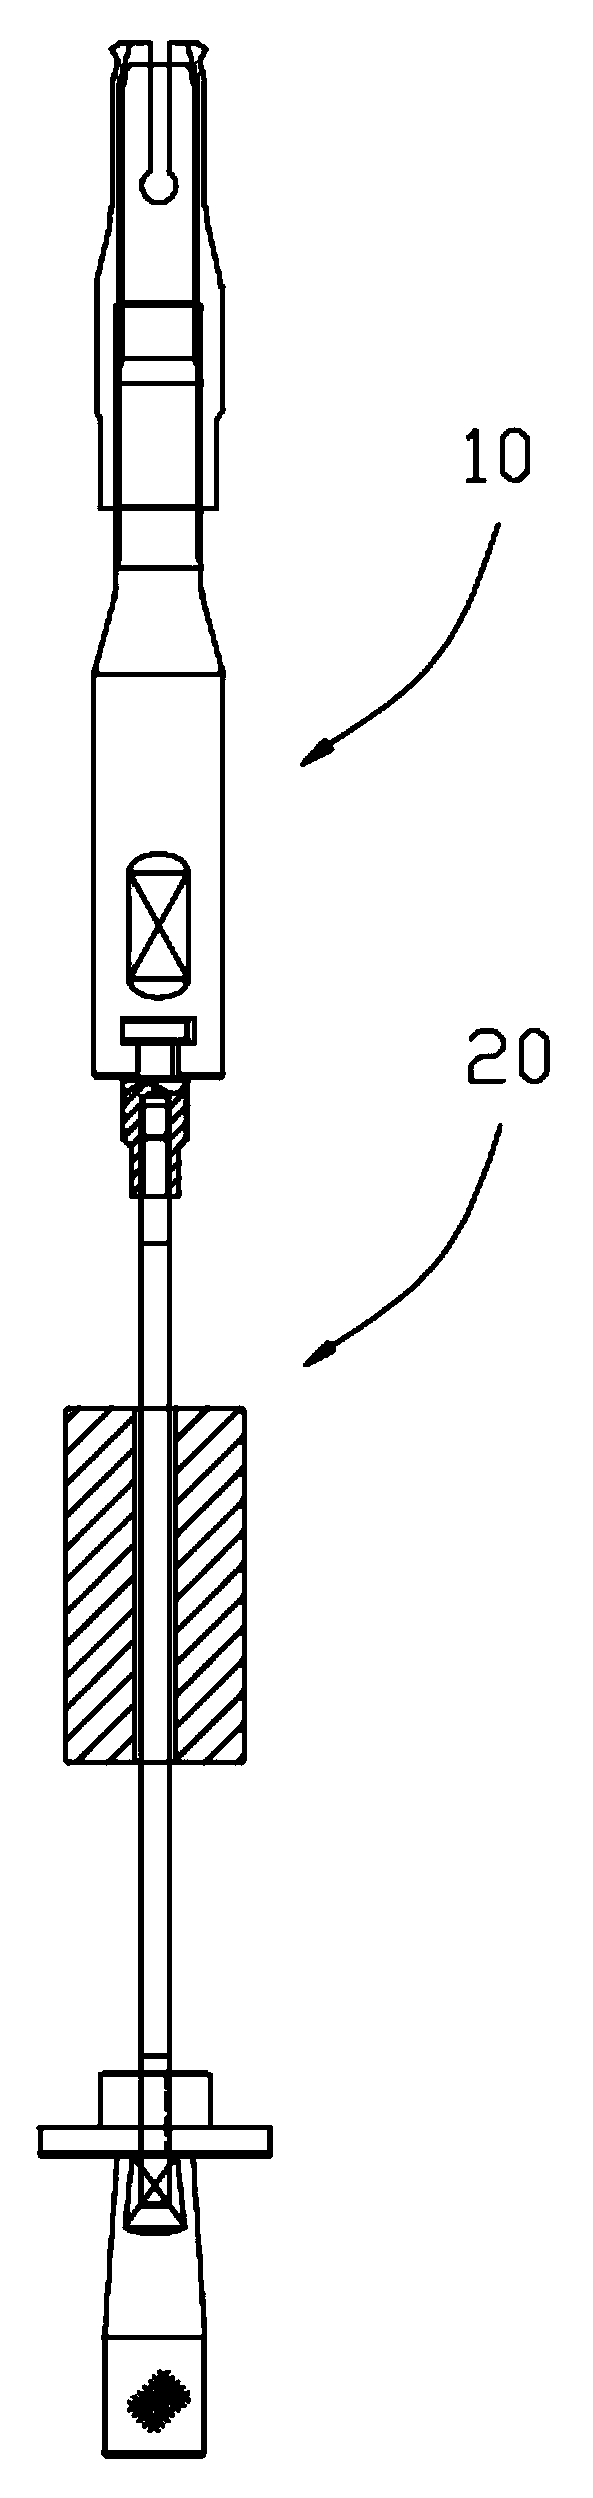 Bowl-shaped plug dismantling tool